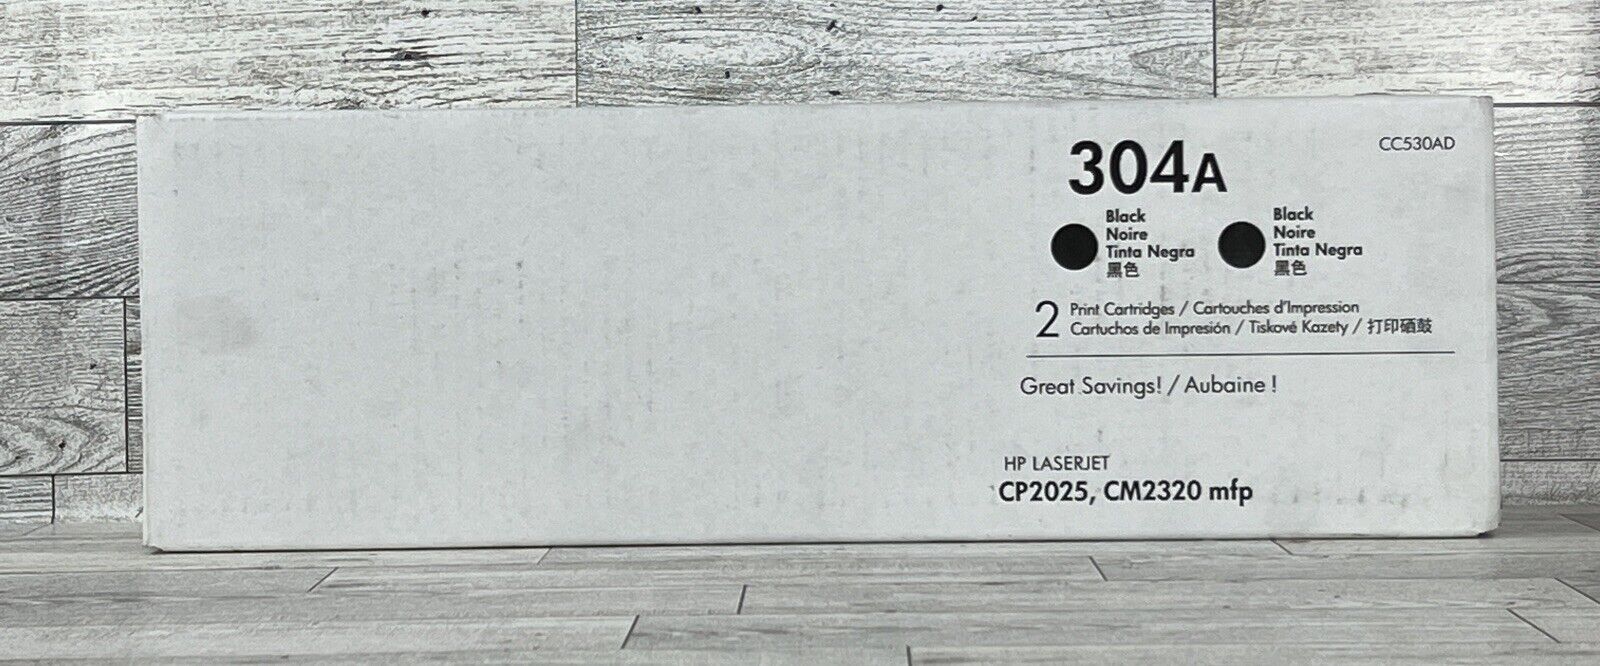 Genuine HP 304A Toner Cartridge Black CC530AD Expired 03/23/2017 New In Box